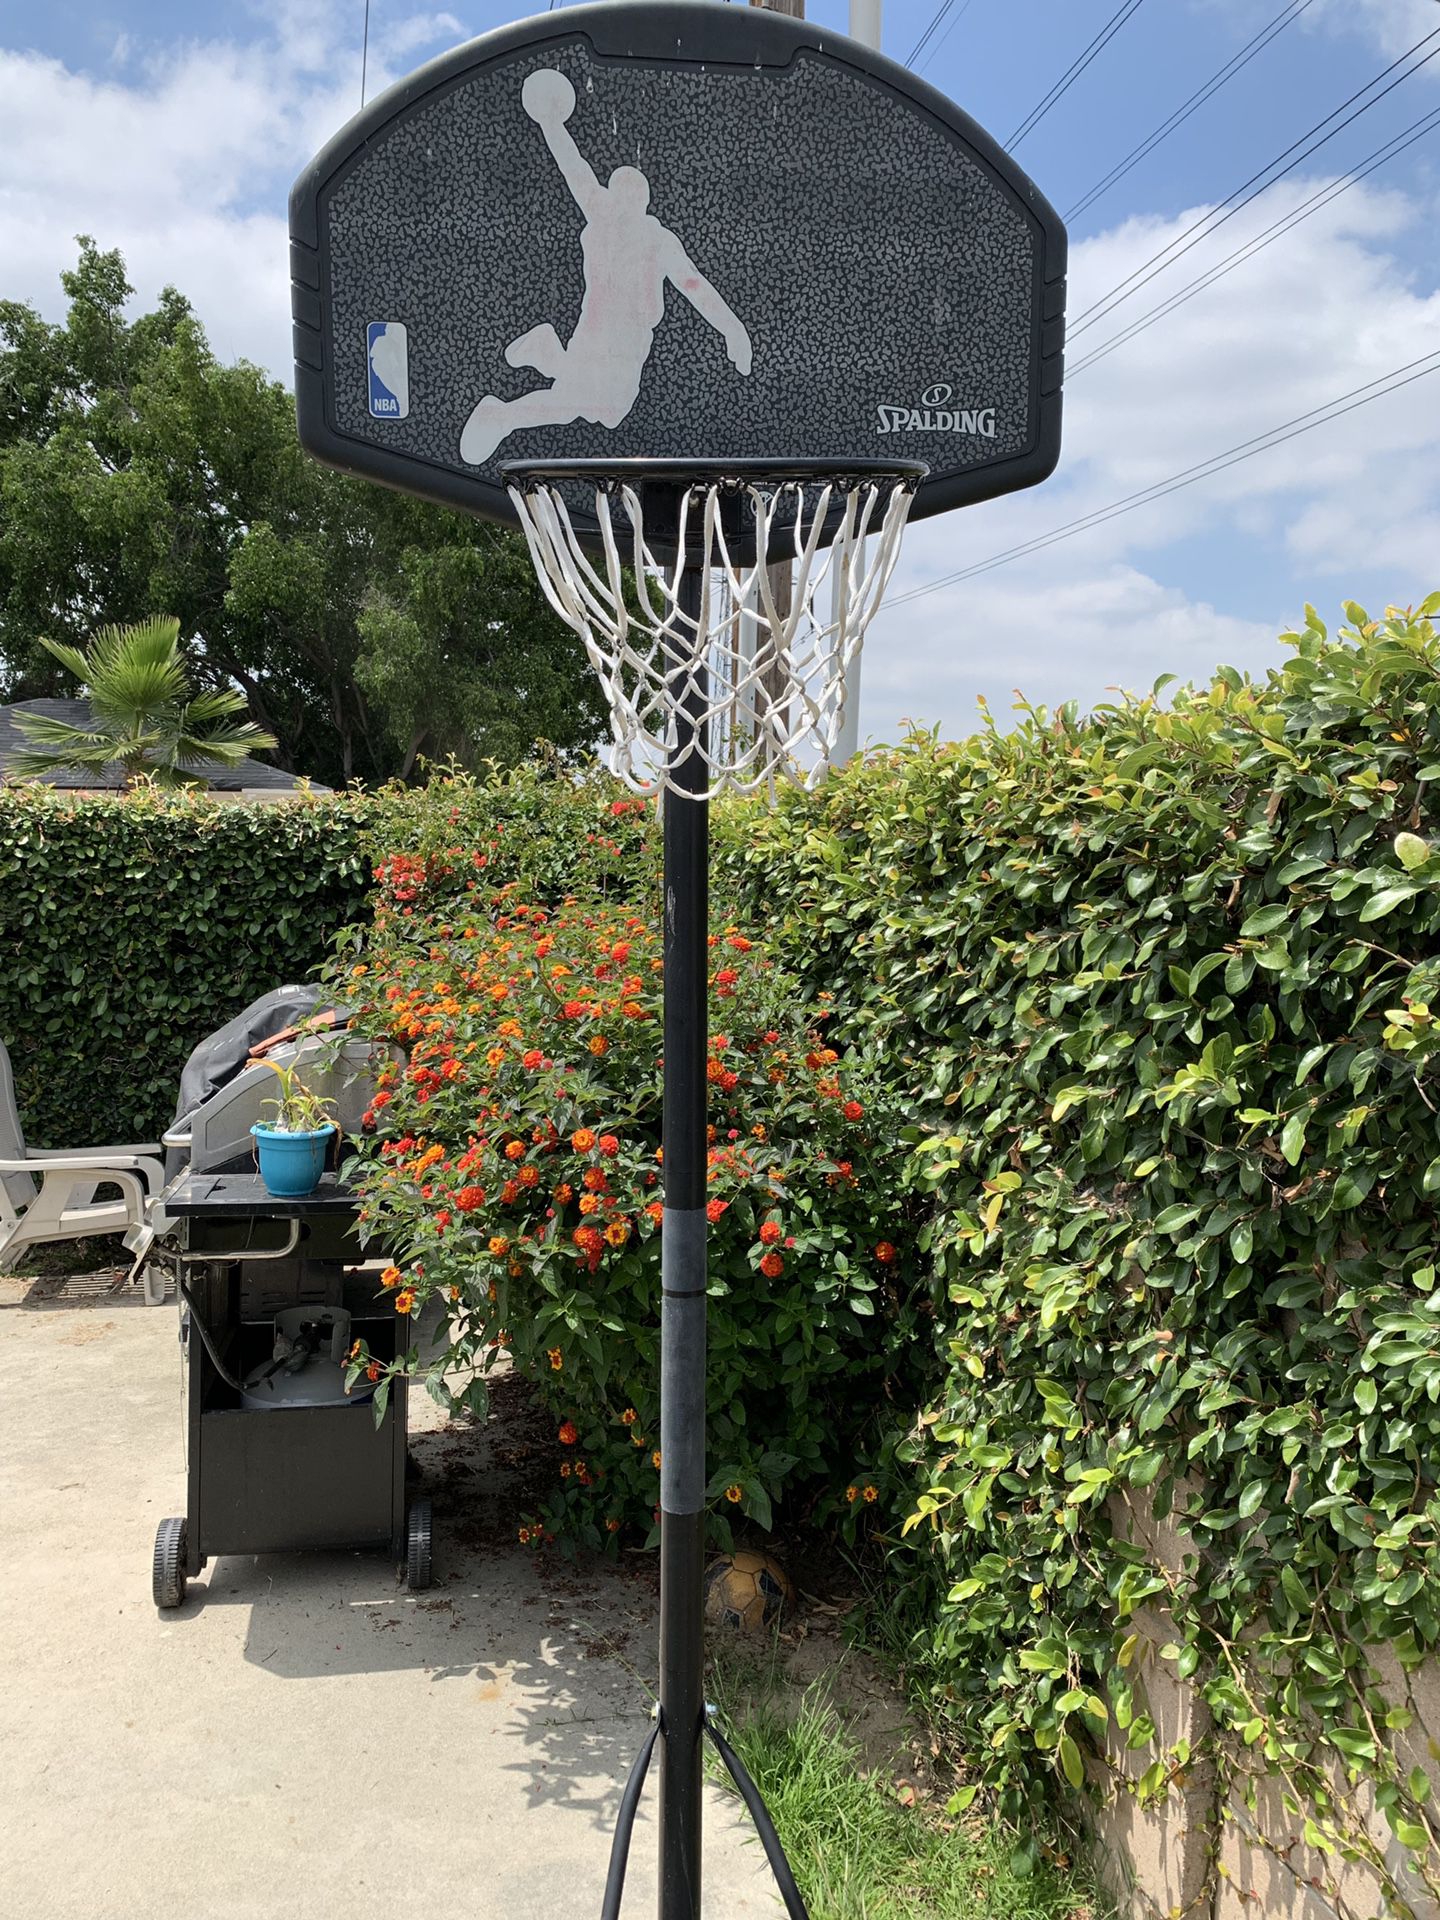 Used basketball hoop